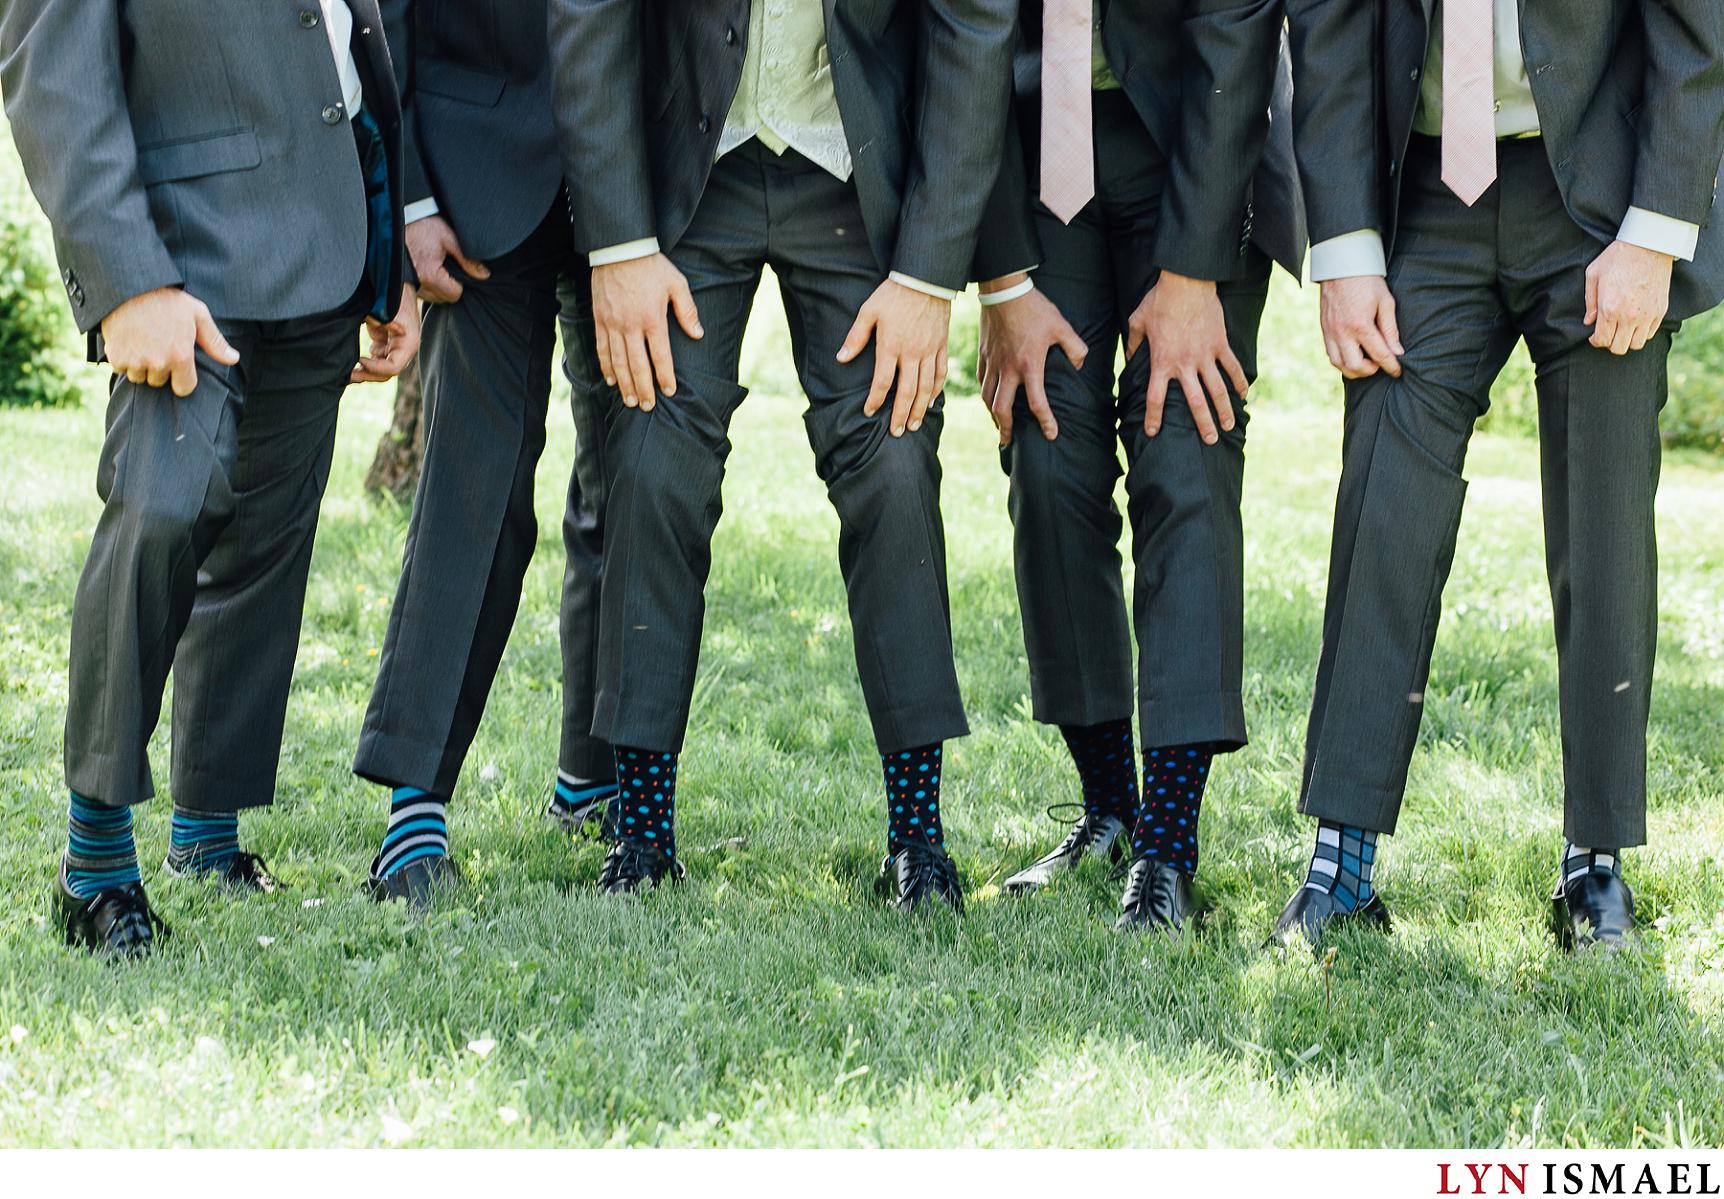 Groom and his groomsmen show off their socks.